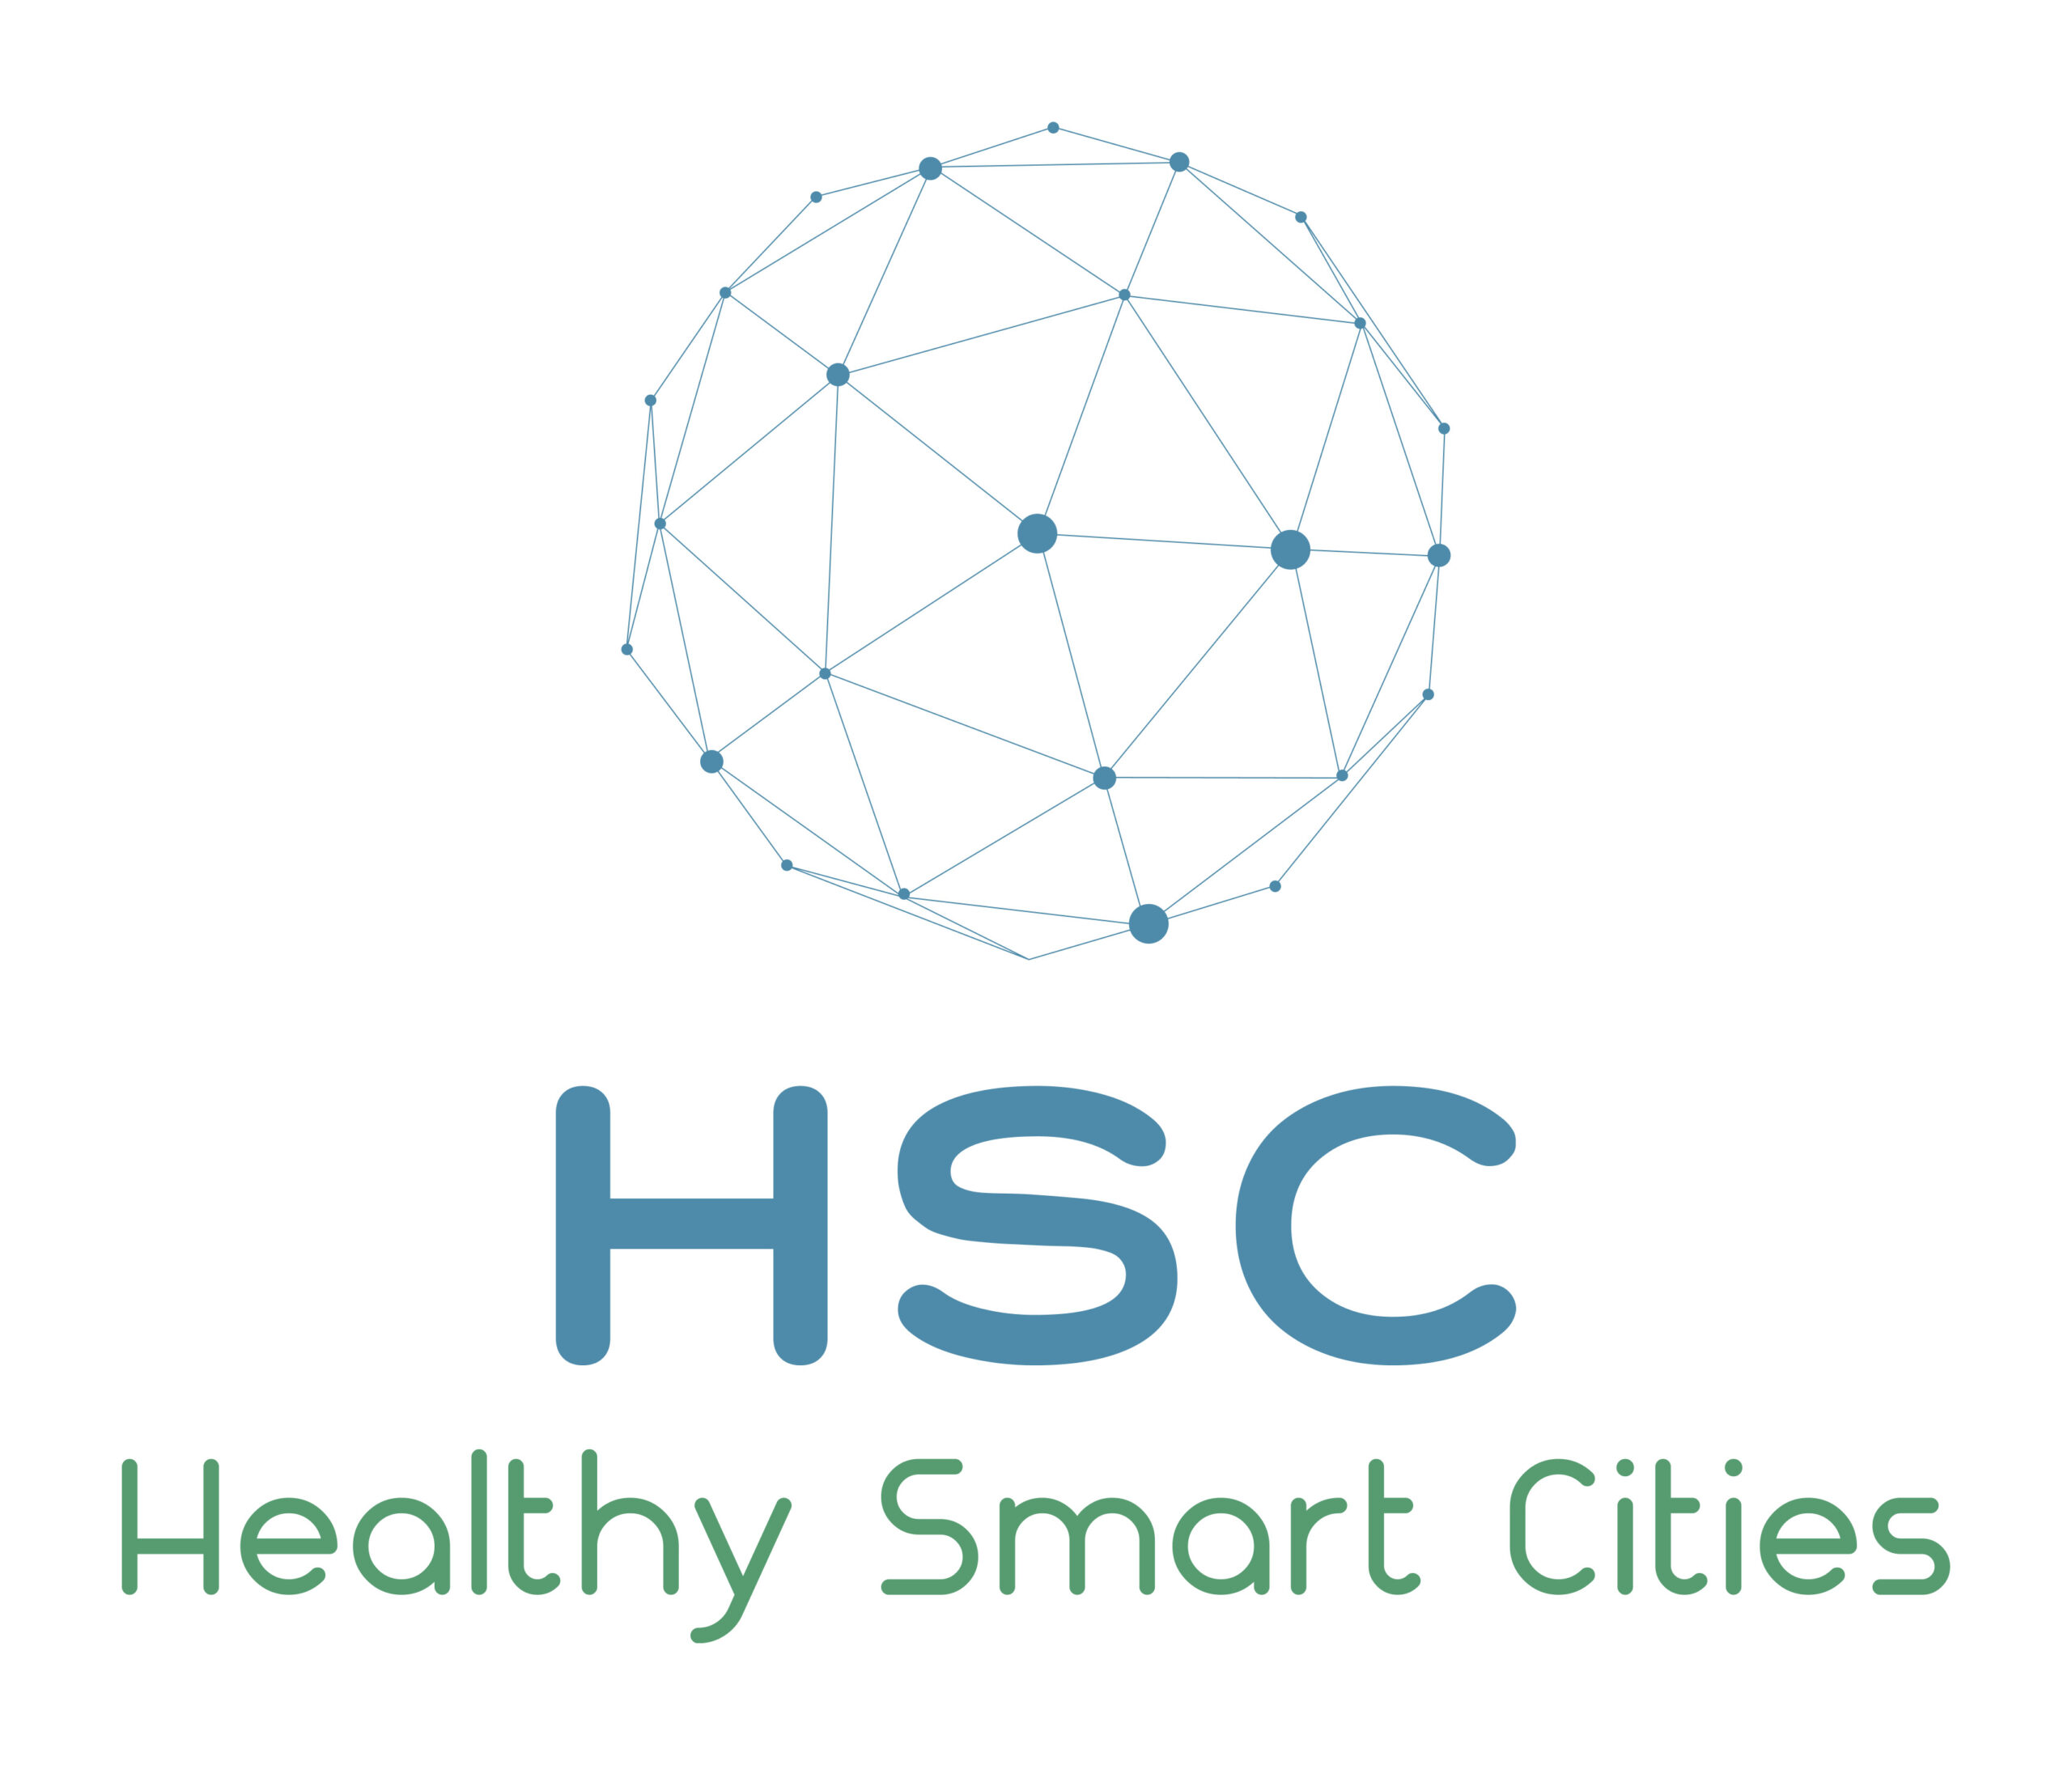 HSC logo